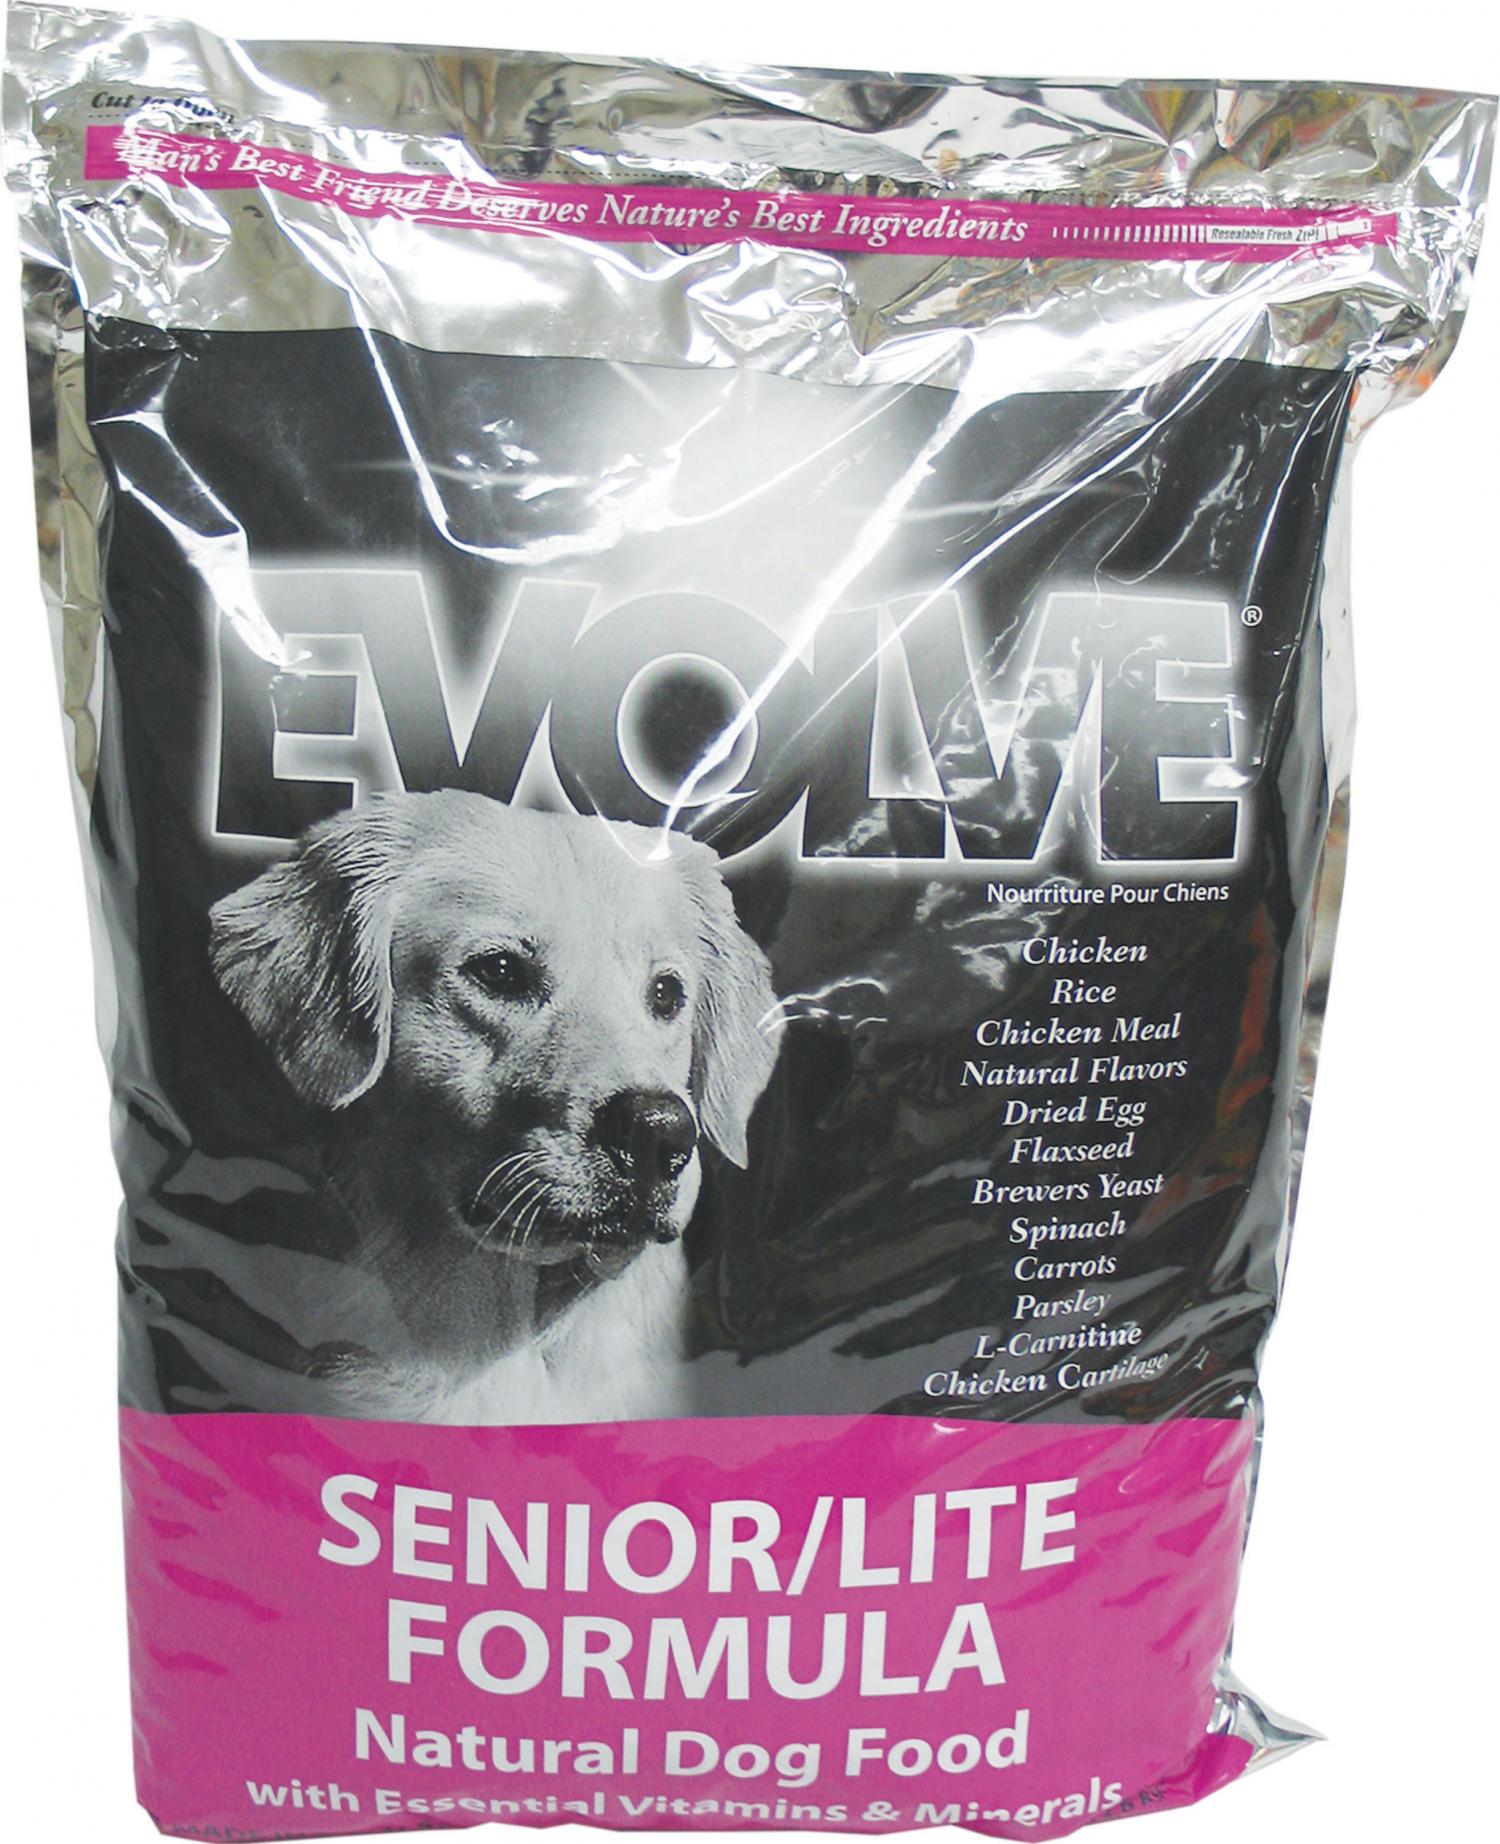 Evolve Senior/lite Formula Dog Food